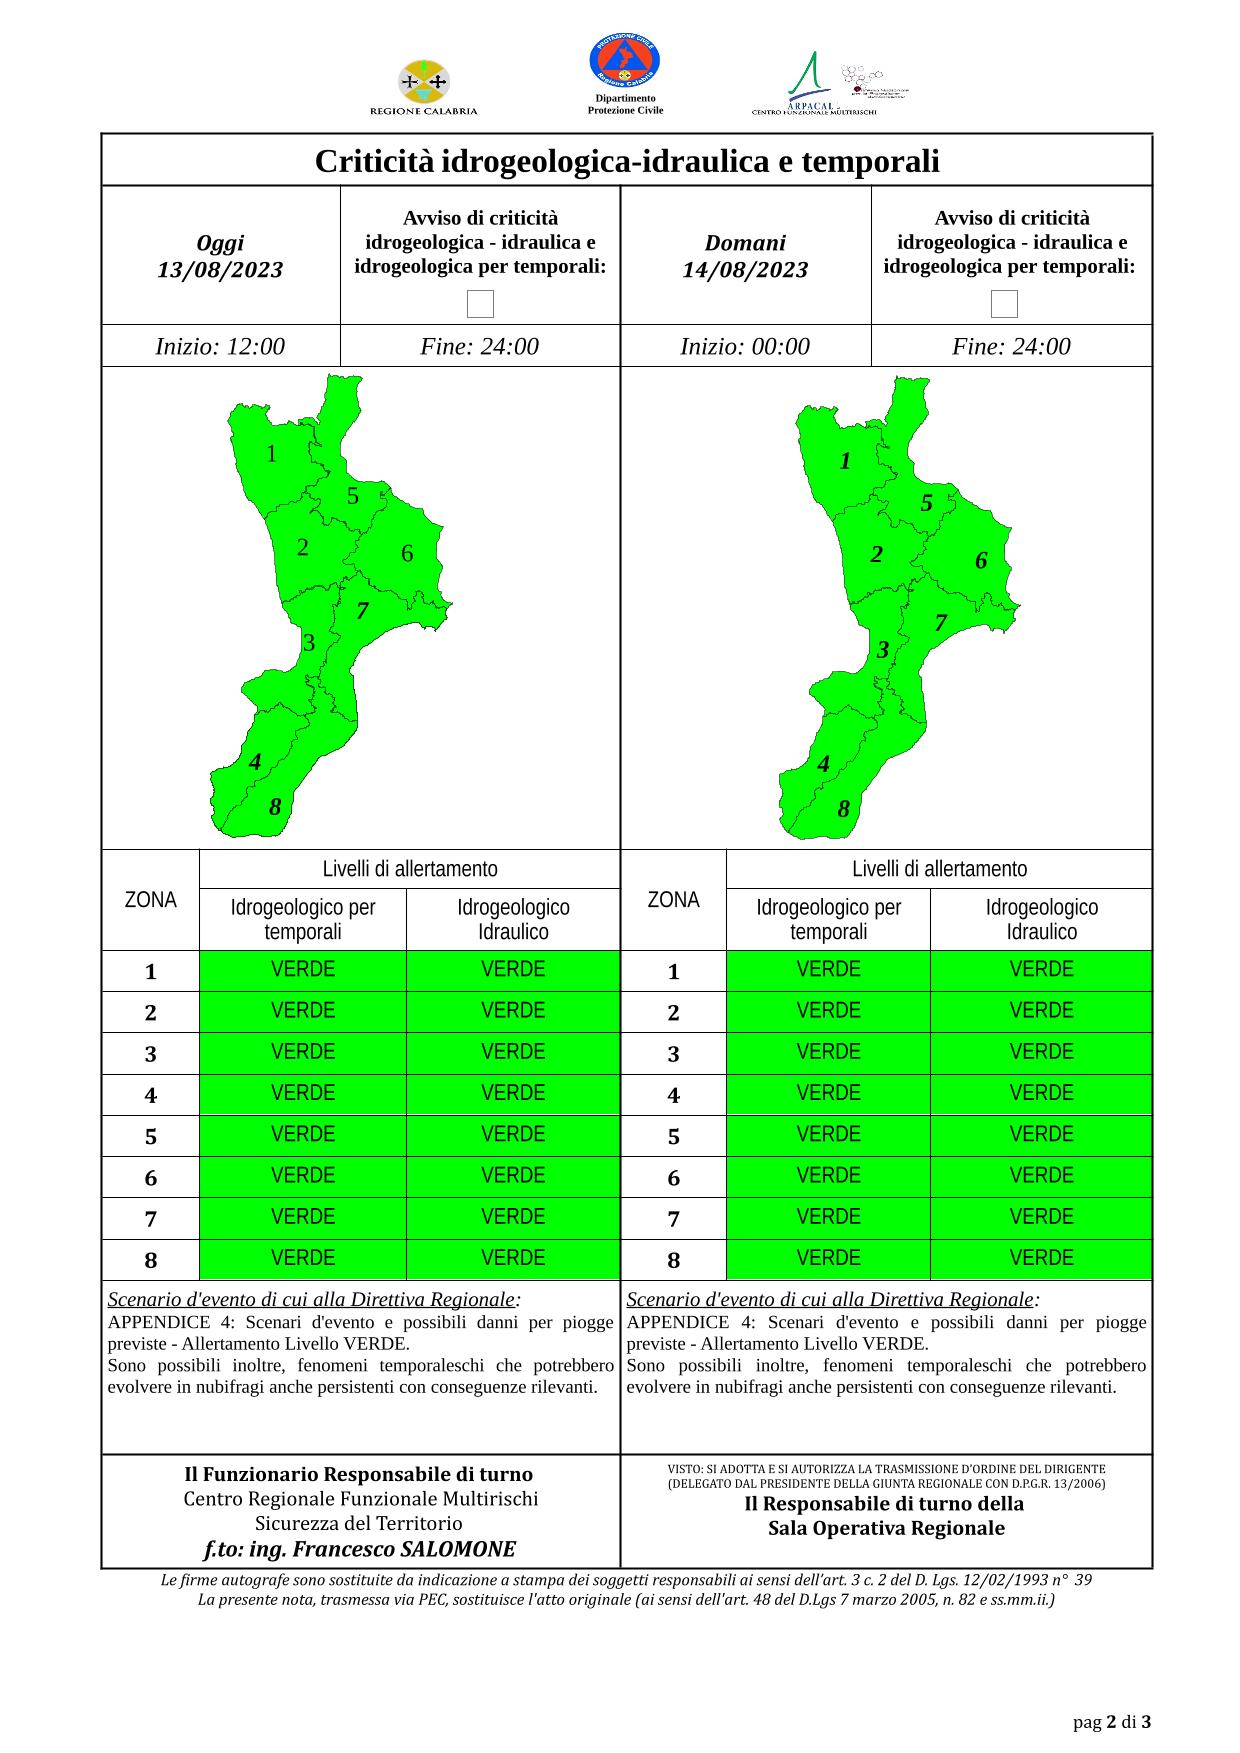 Criticità idrogeologica-idraulica e temporali in Calabria 13-08-2023